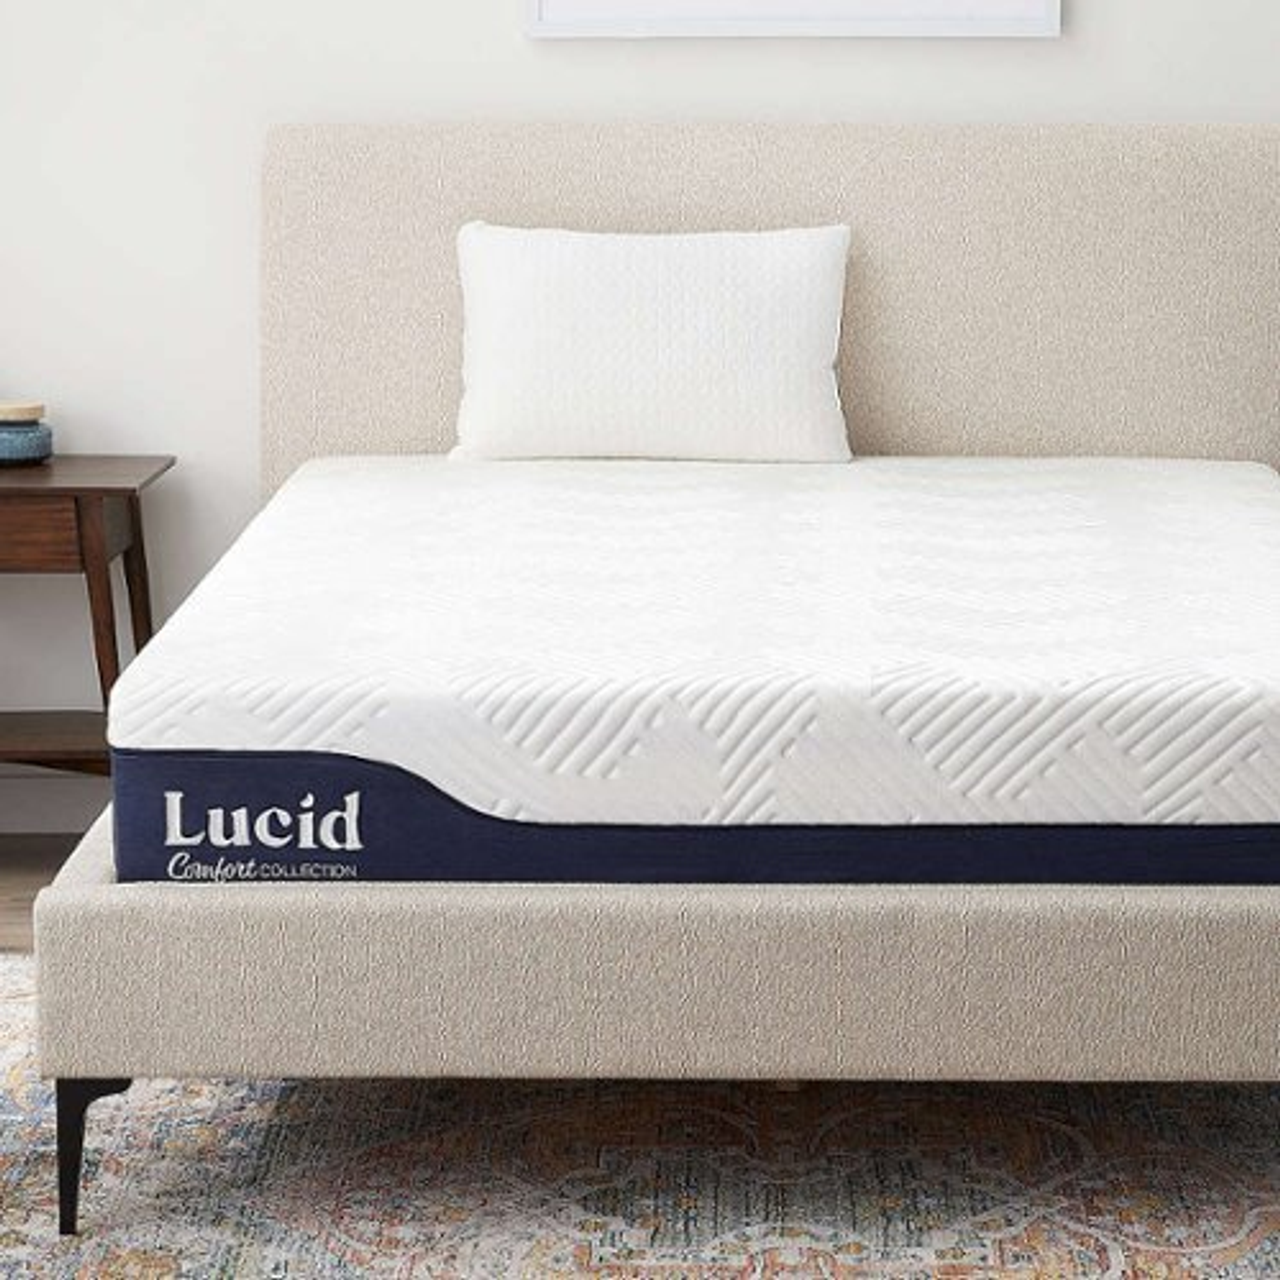 Lucid Comfort Collection - 10-inch Memory Foam Hybrid Mattress - Full - White